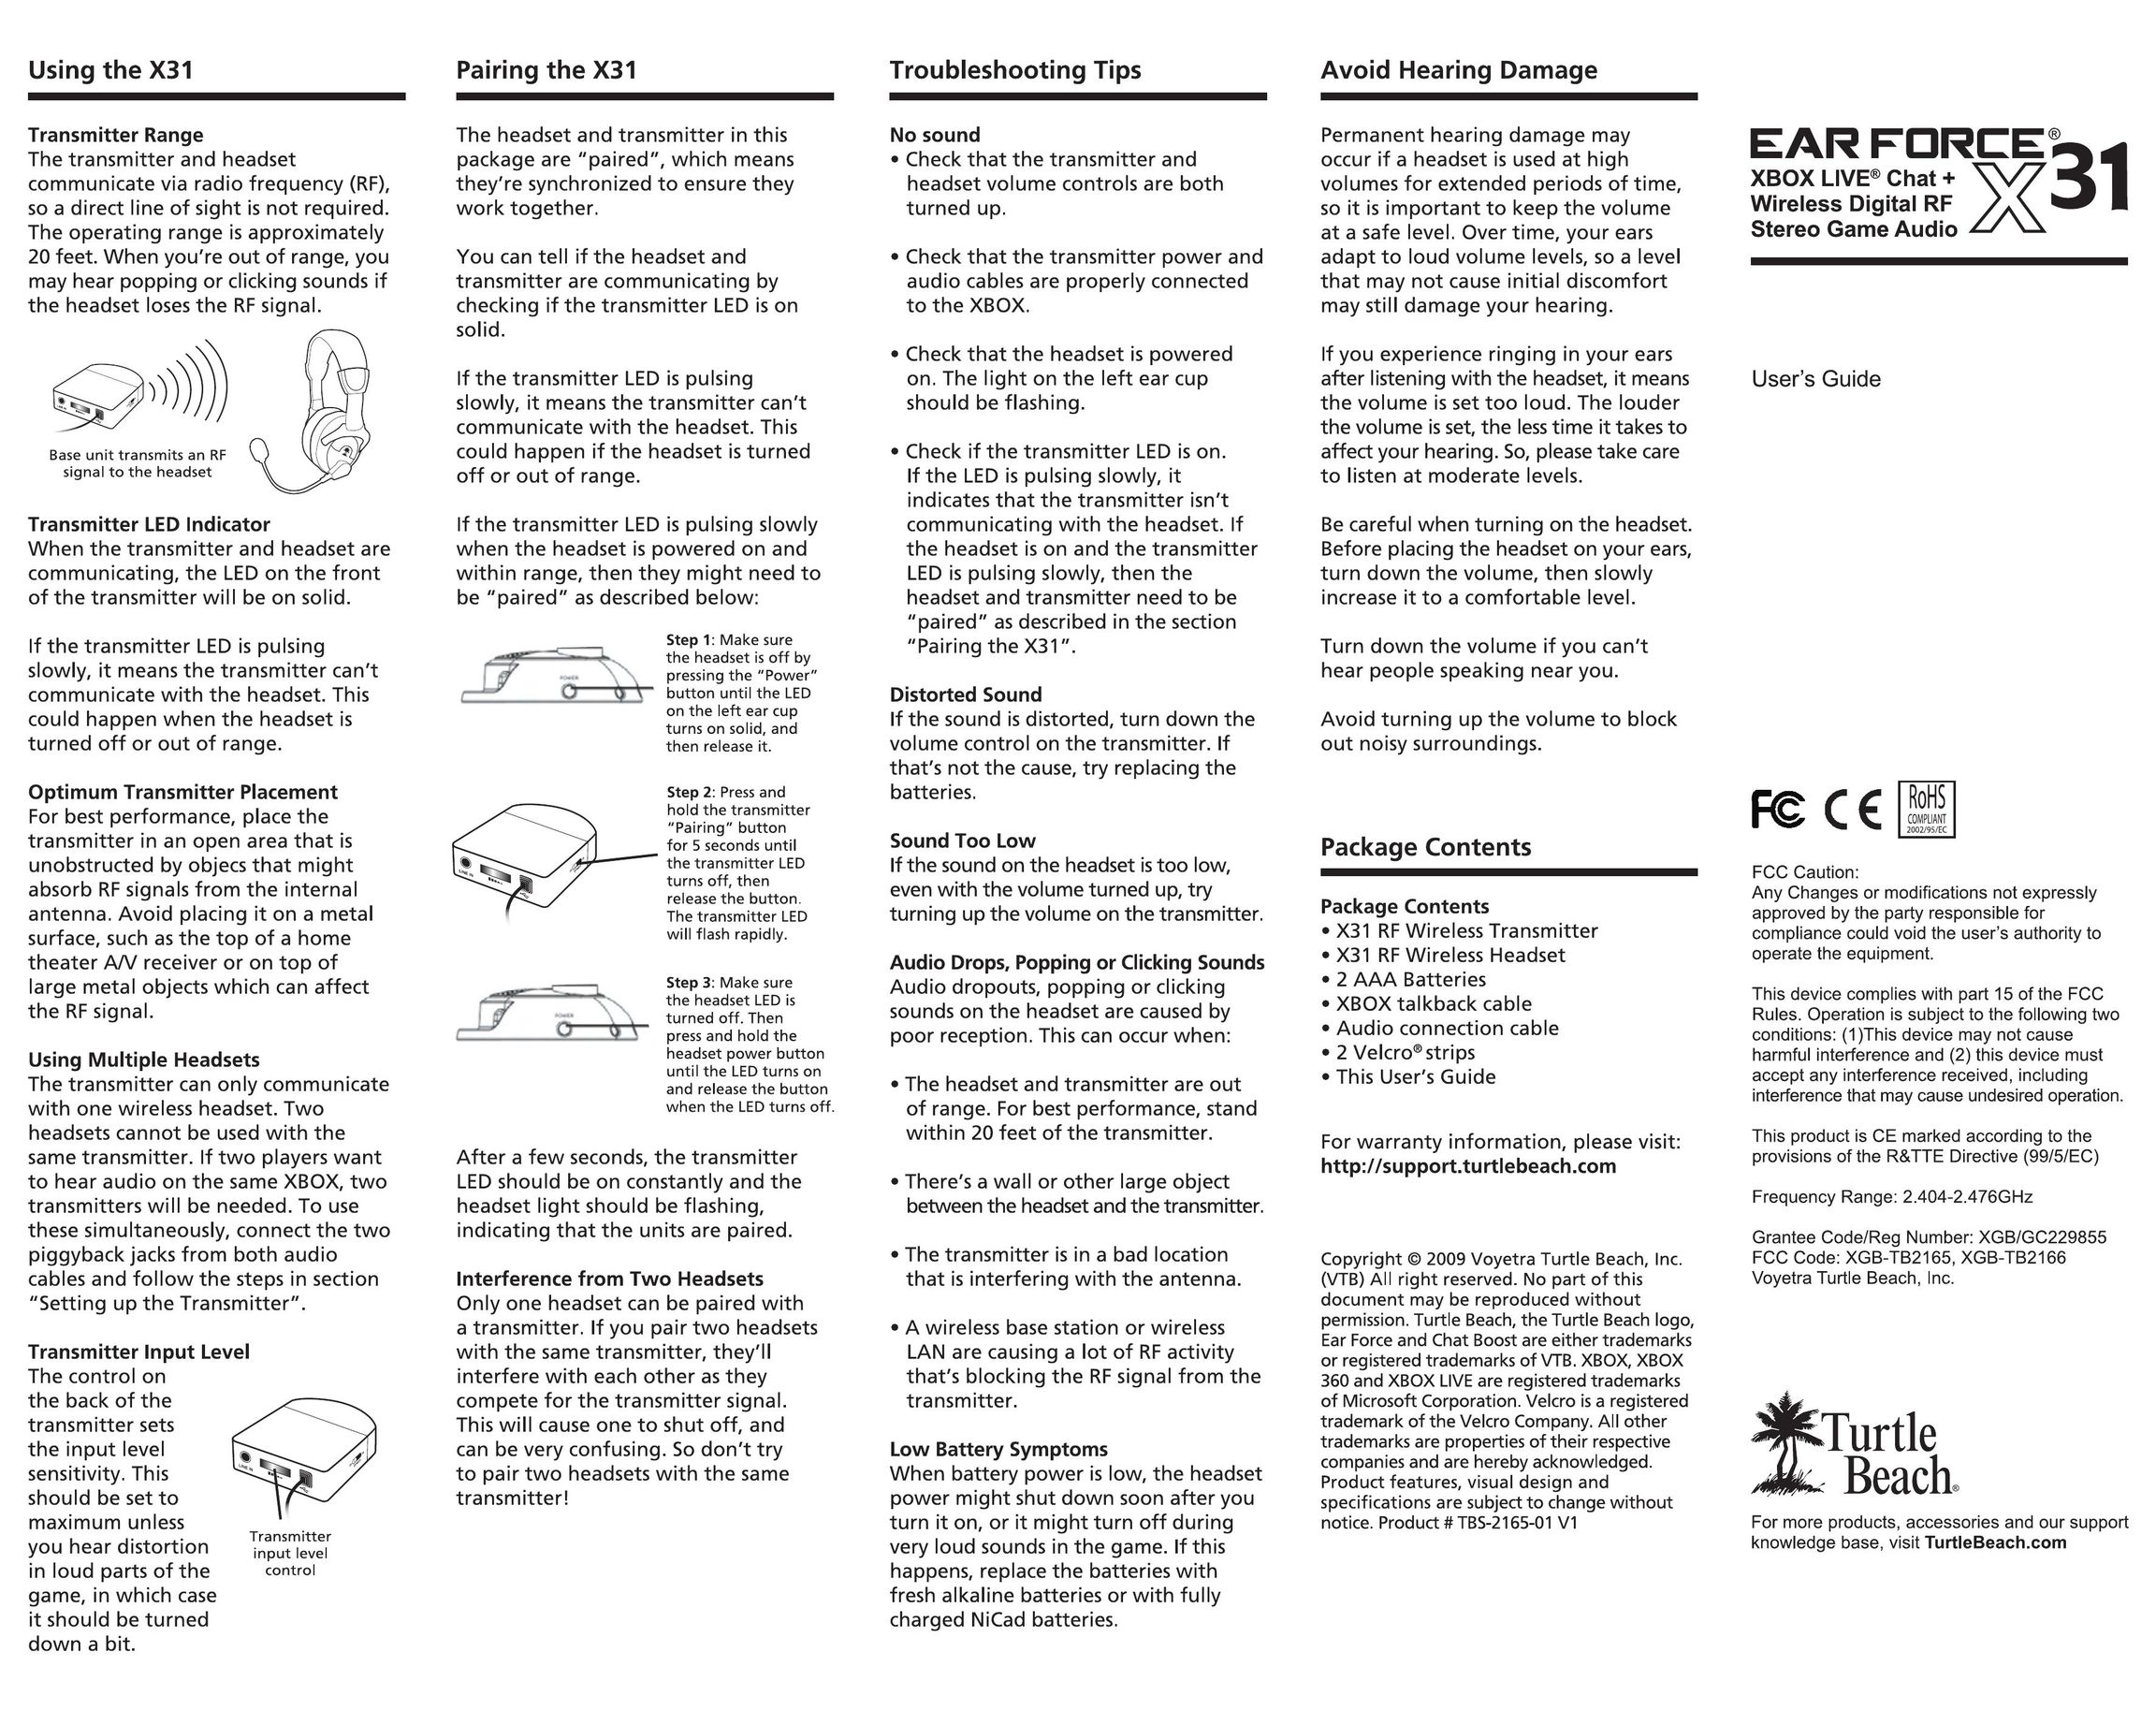 Turtle Beach X31 Headphones User Manual